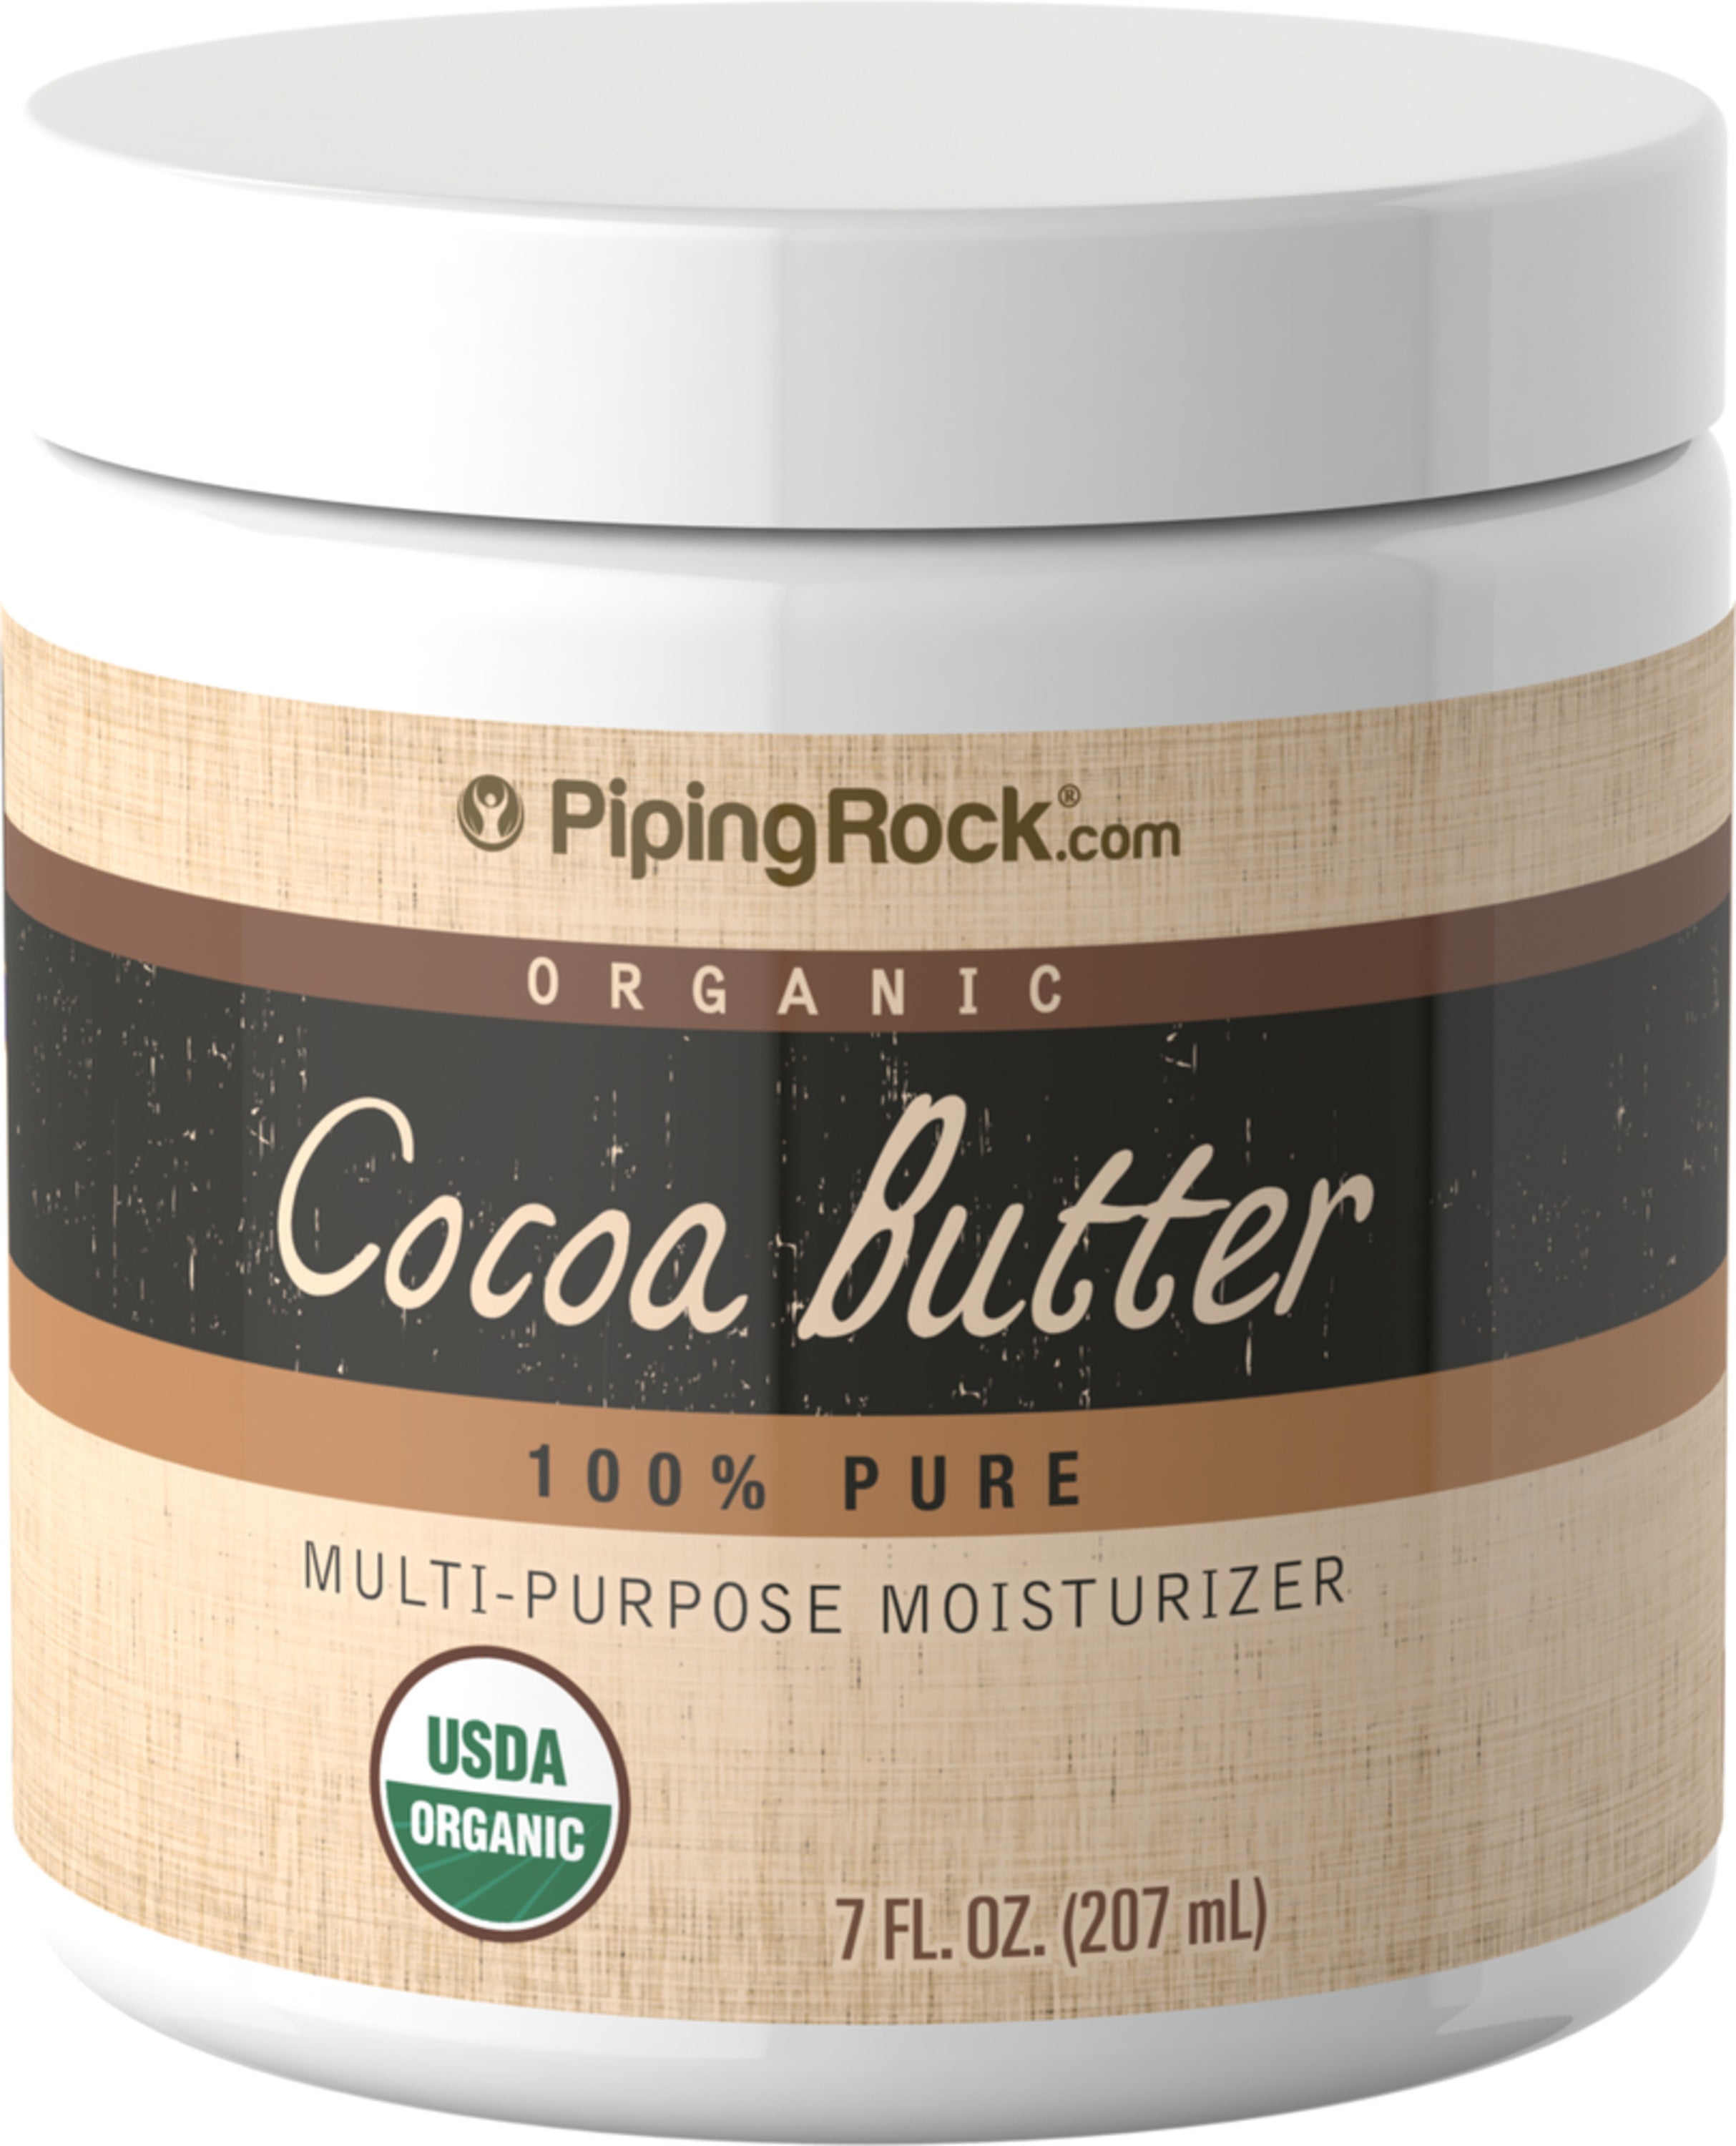 Beurre de coco bio premium / Coconut Butter, 26 g